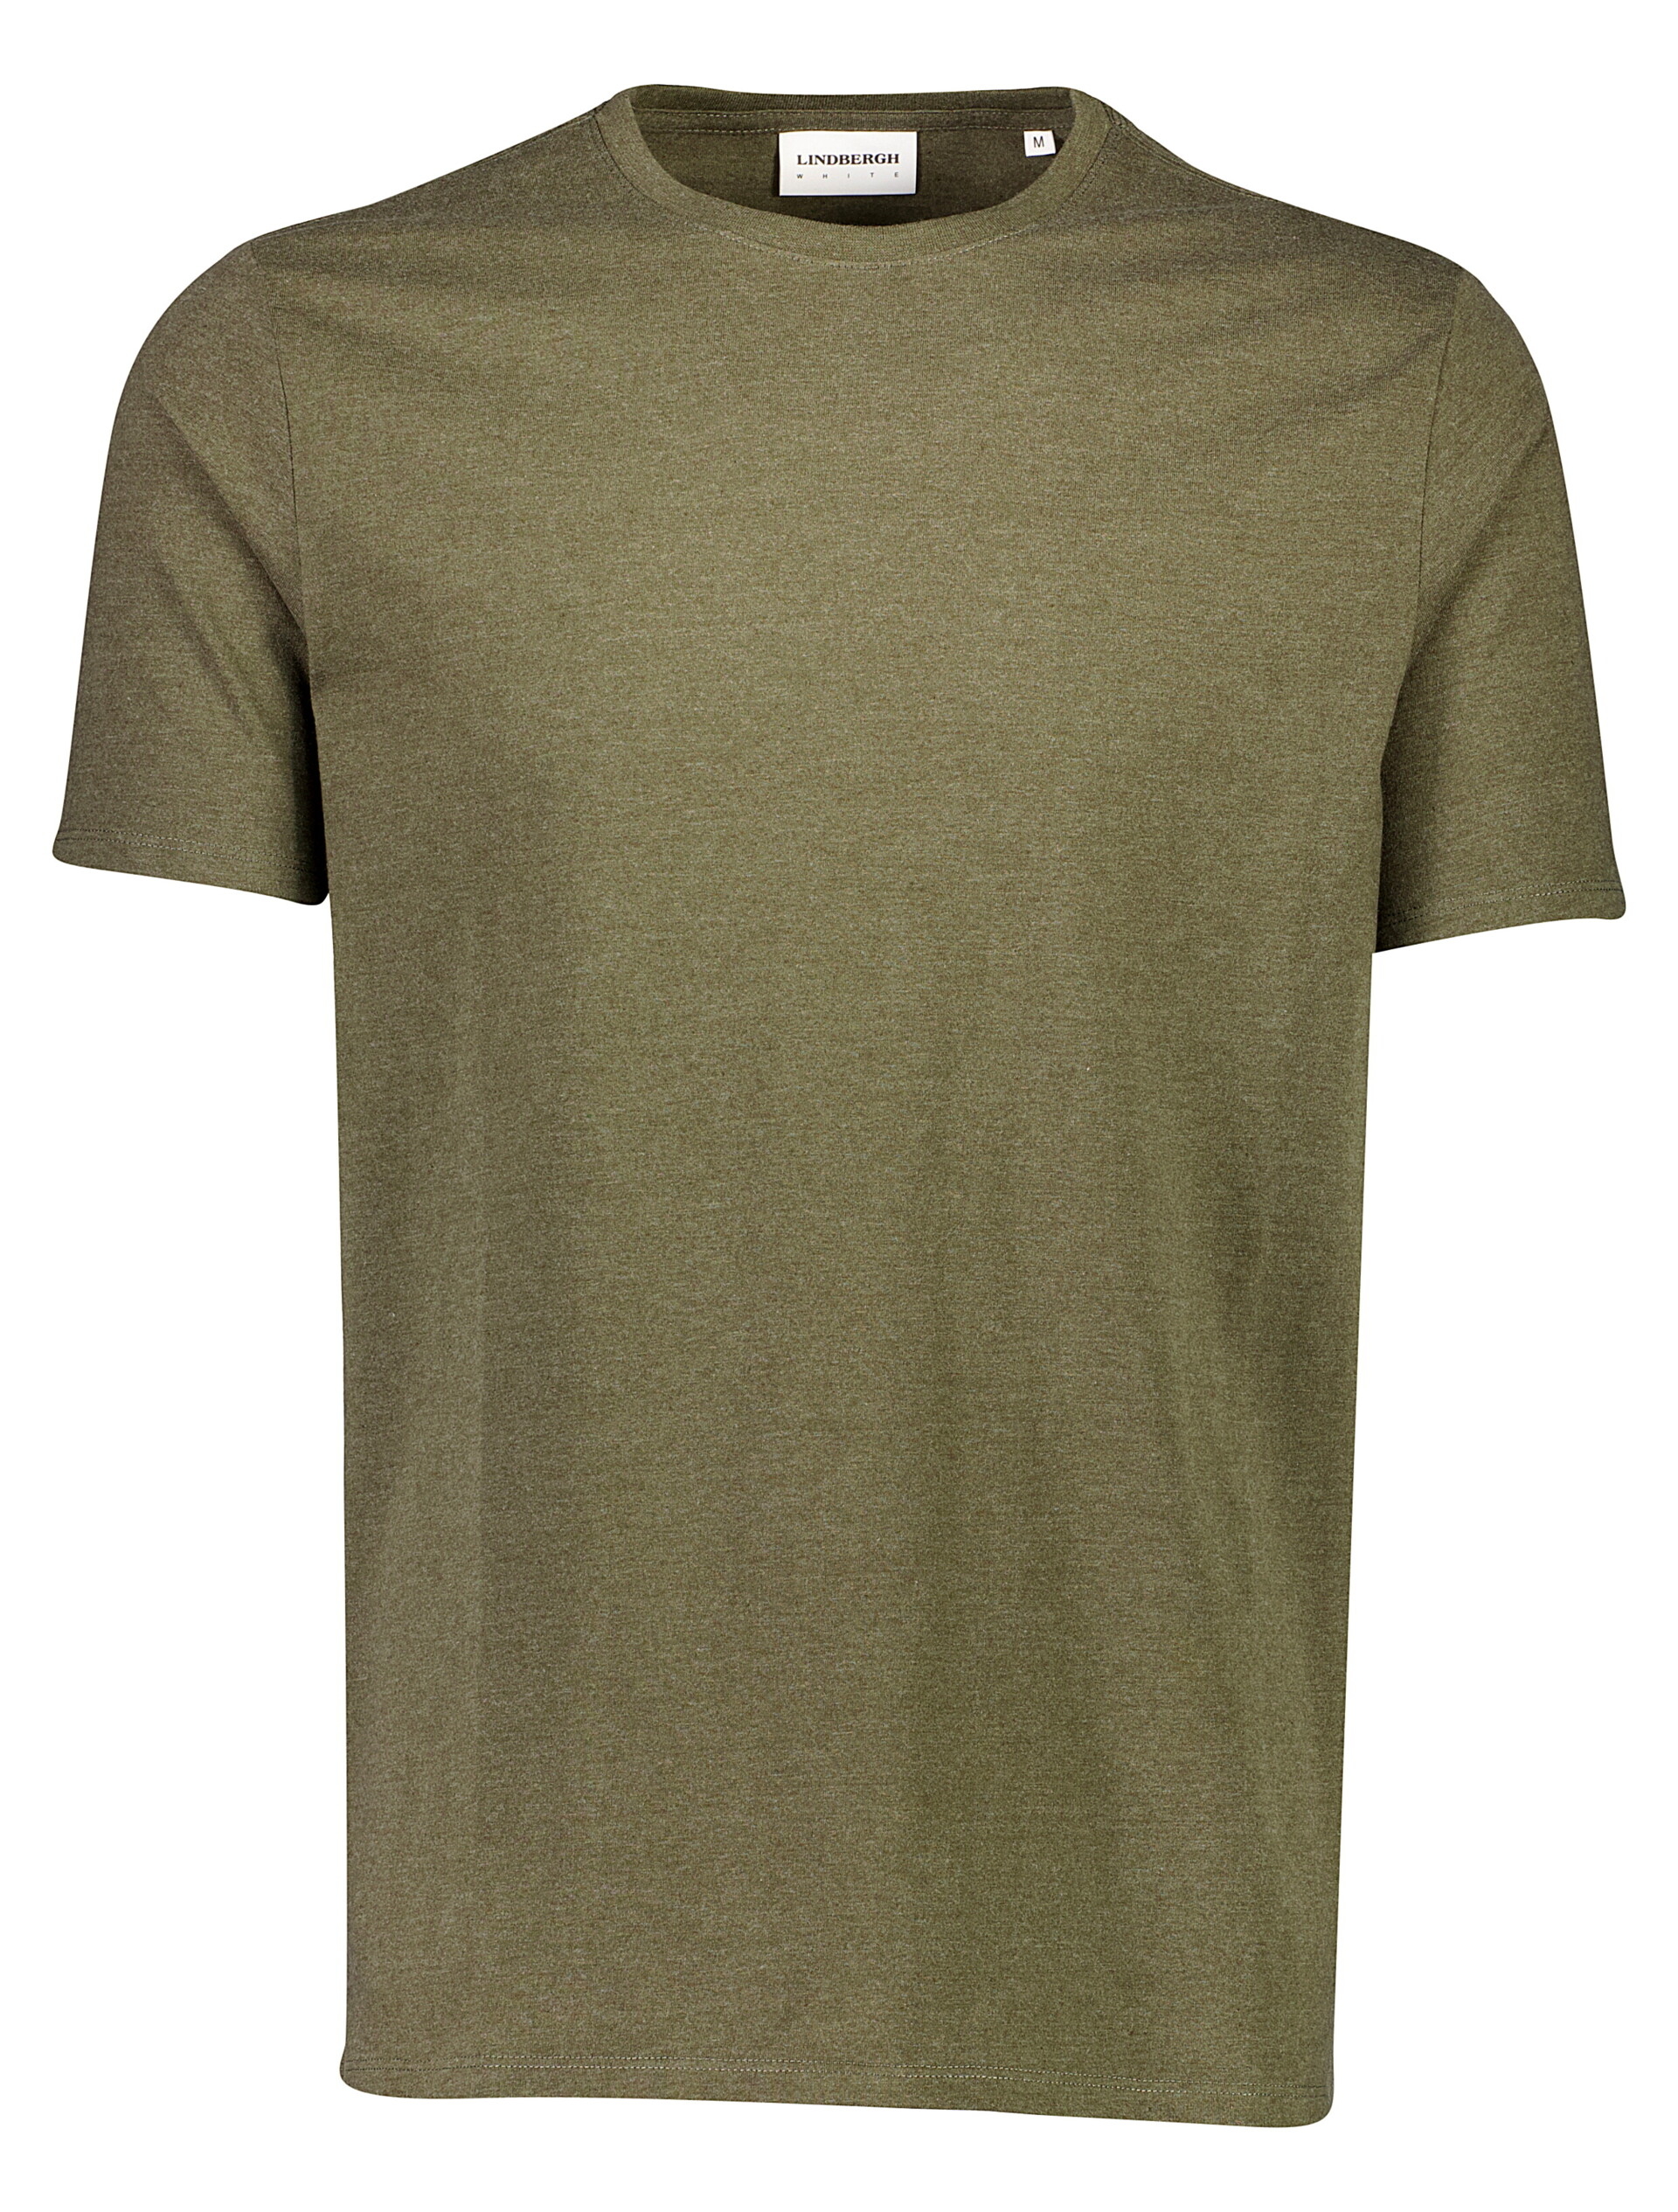 Lindbergh T-shirt groen / army mel